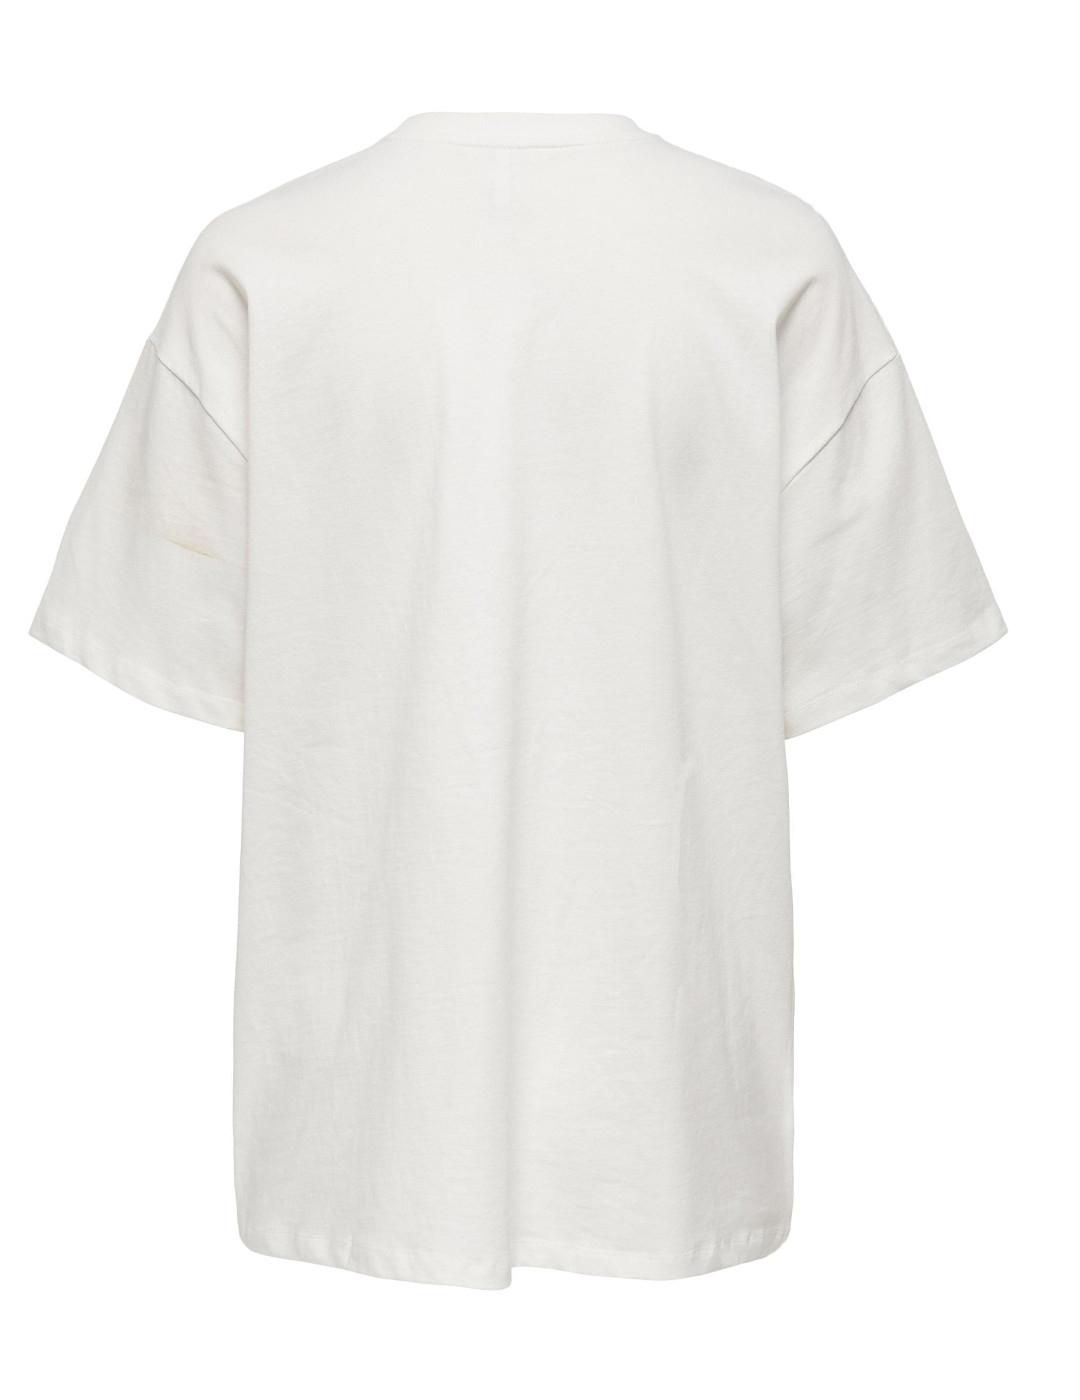 Camiseta Only Luna blanca de manga corta para mujer